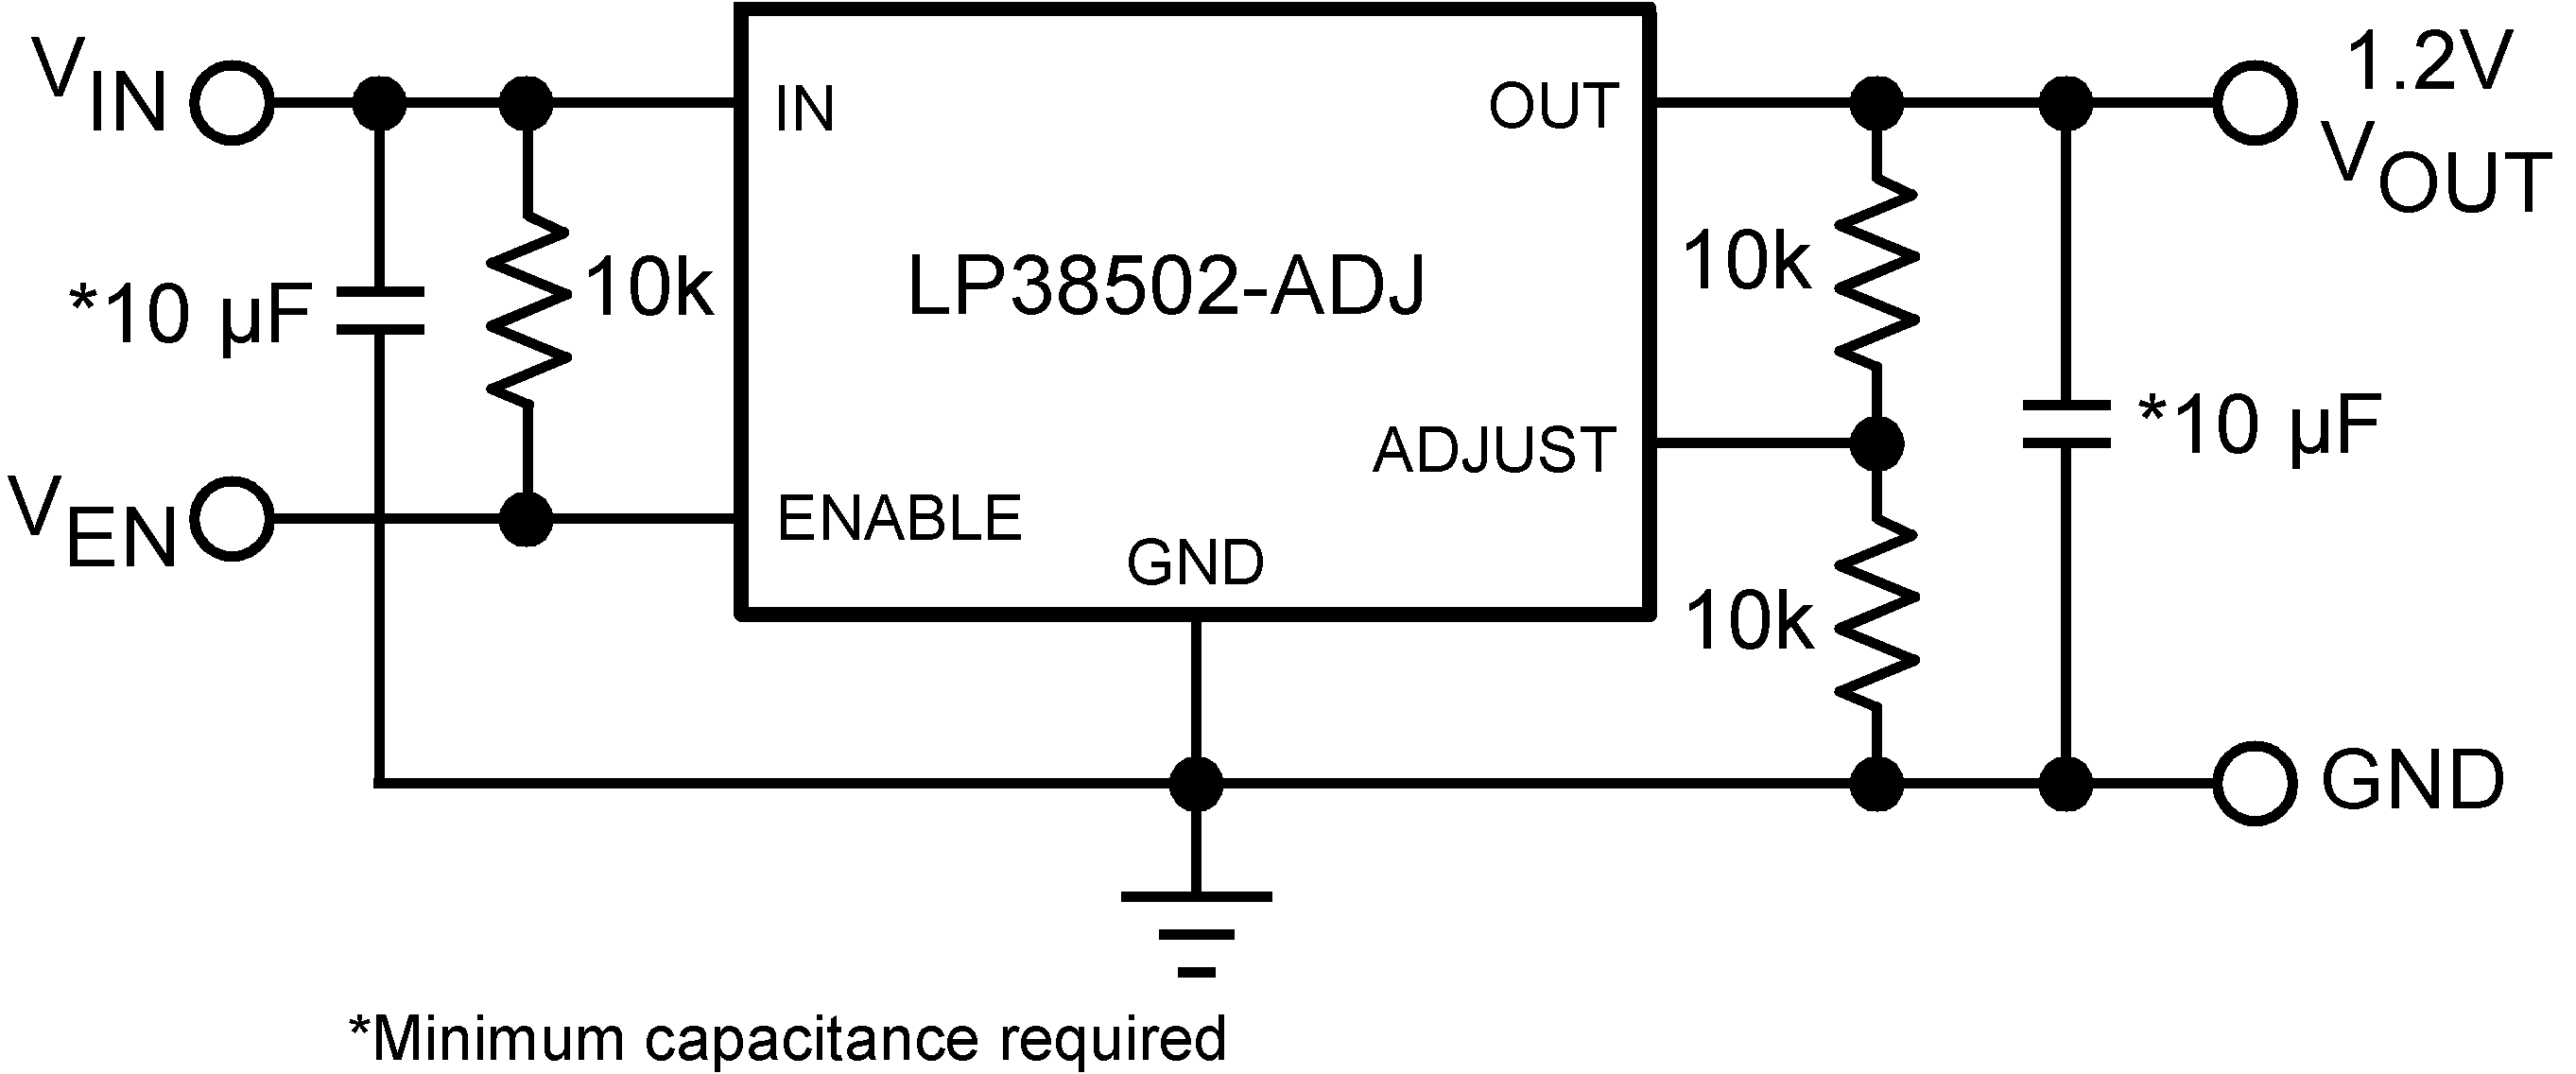 LP38500-ADJ-LP3850x-ADJ, LP3850xA-ADJ 1.5-A Flexcap Low-Dropout Linear Regulator for 2.7-V to 5.5-V Inputs